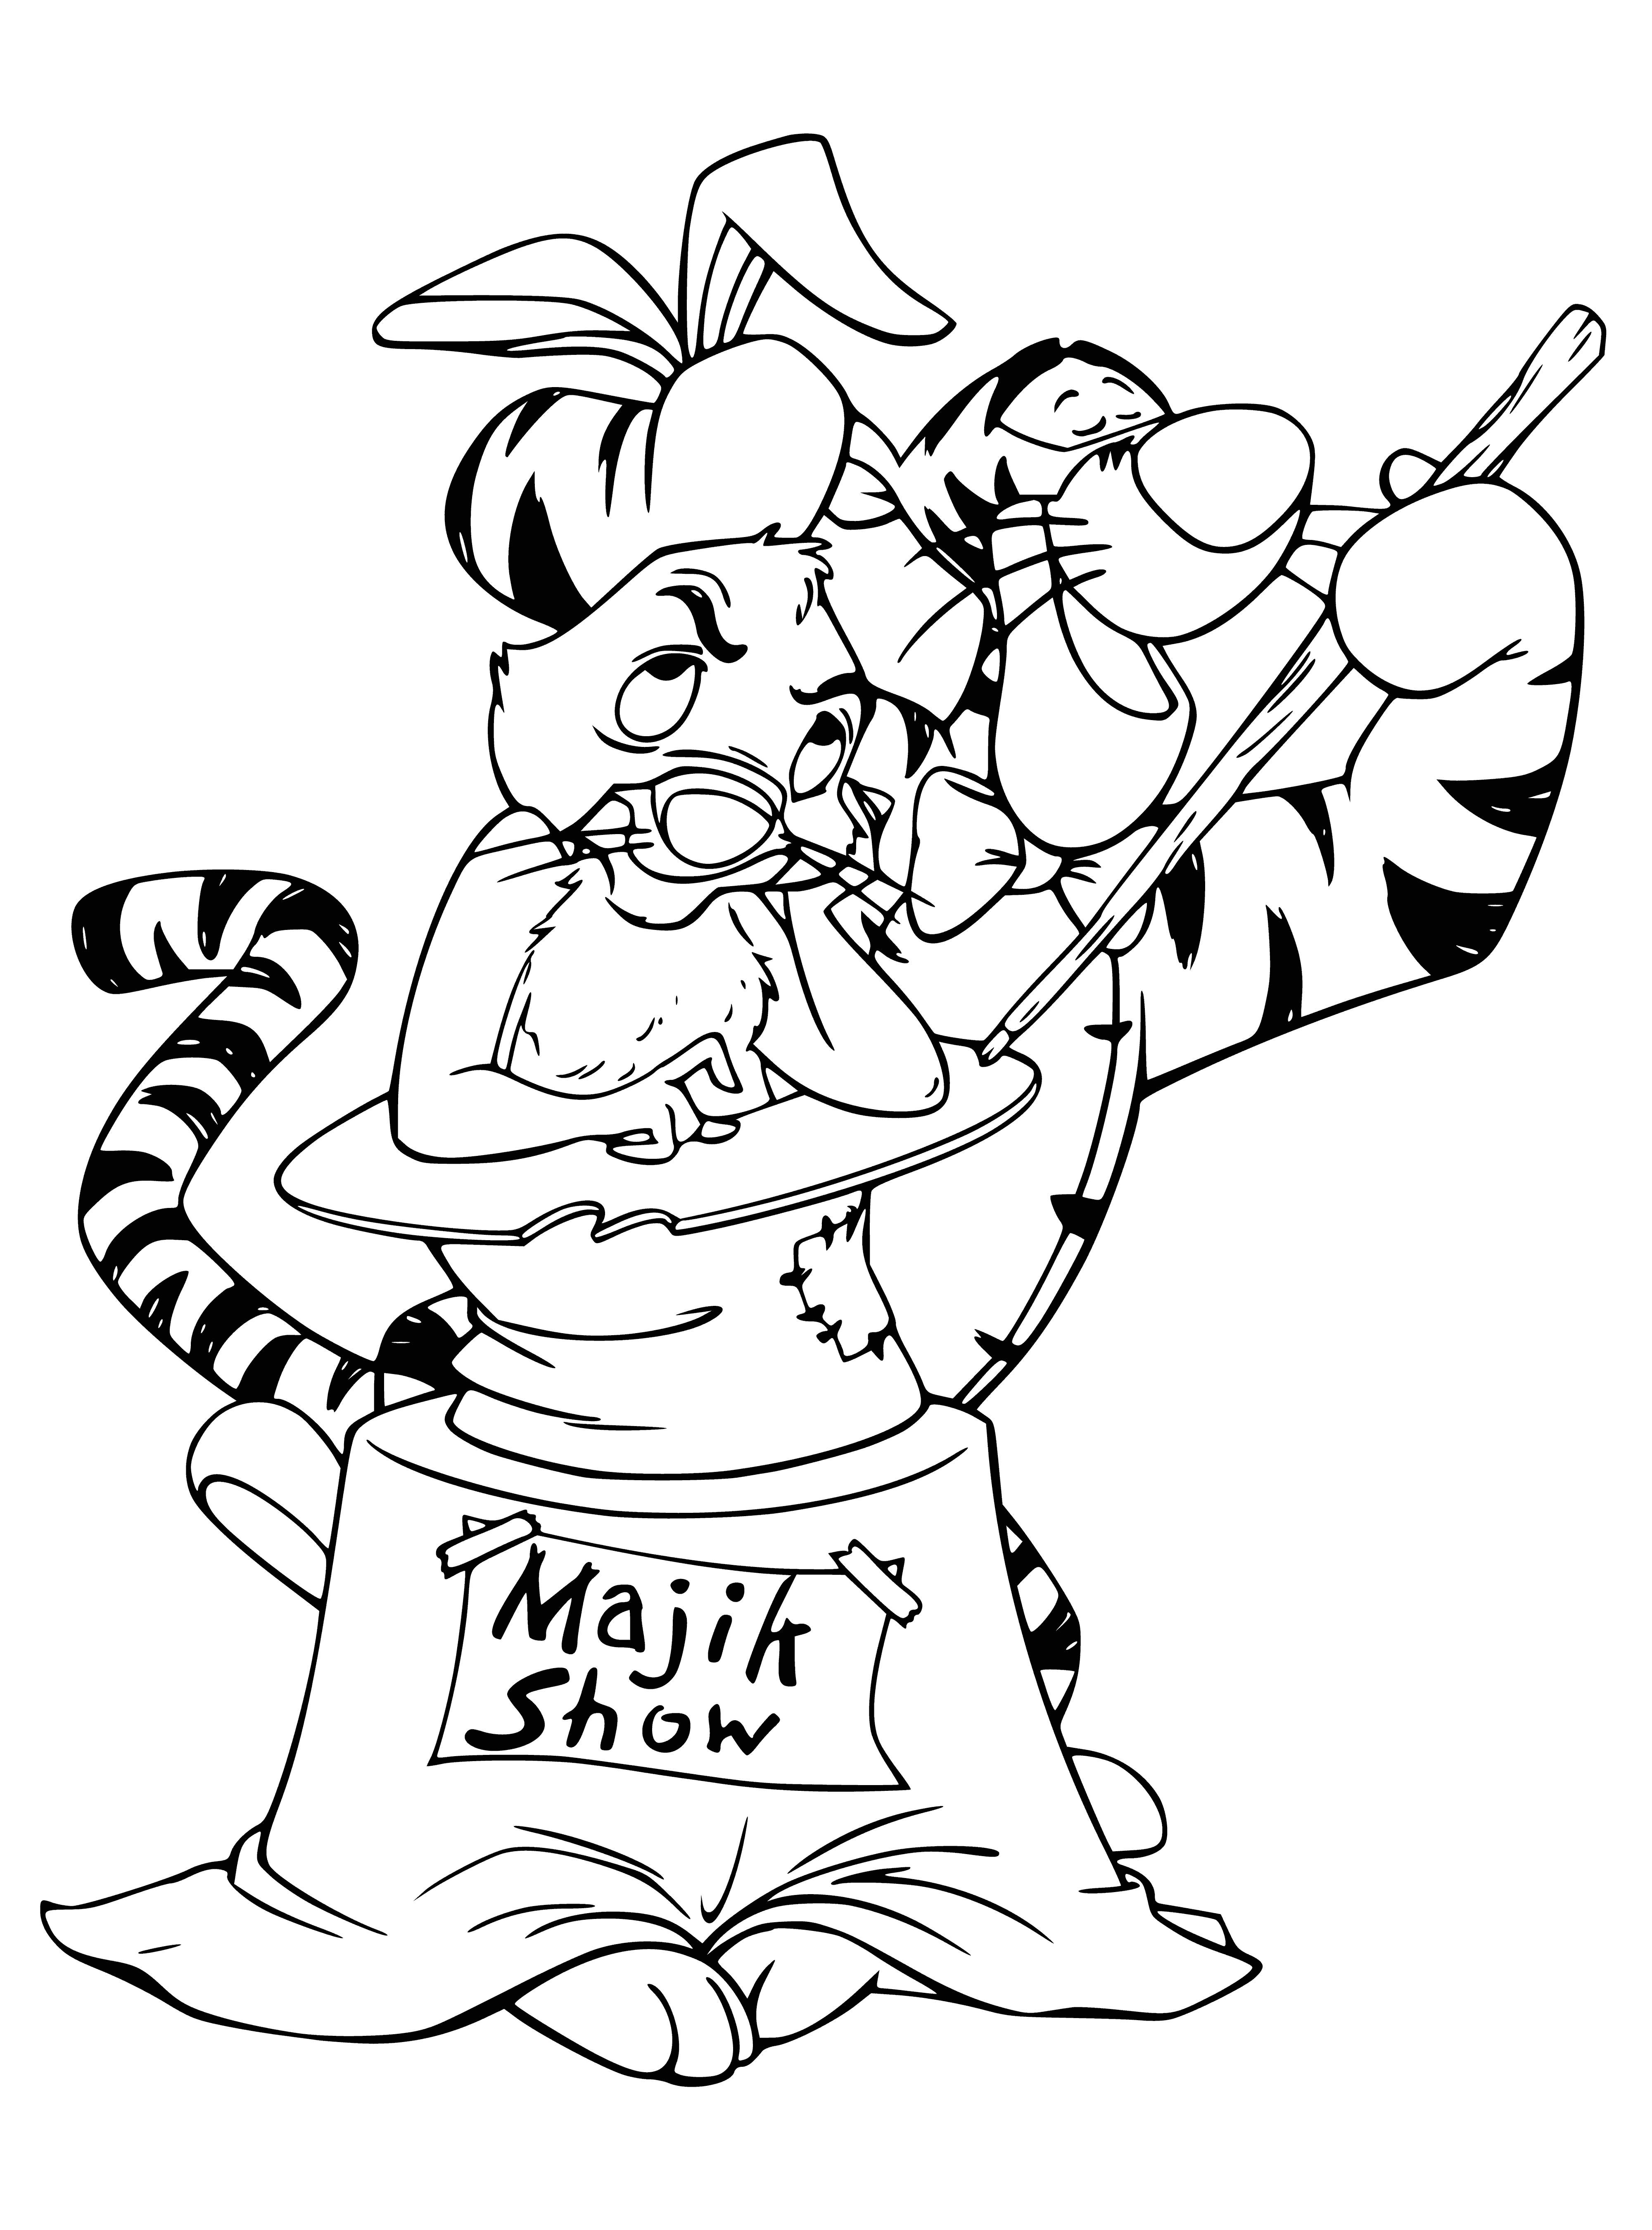 Tiger magician coloring page